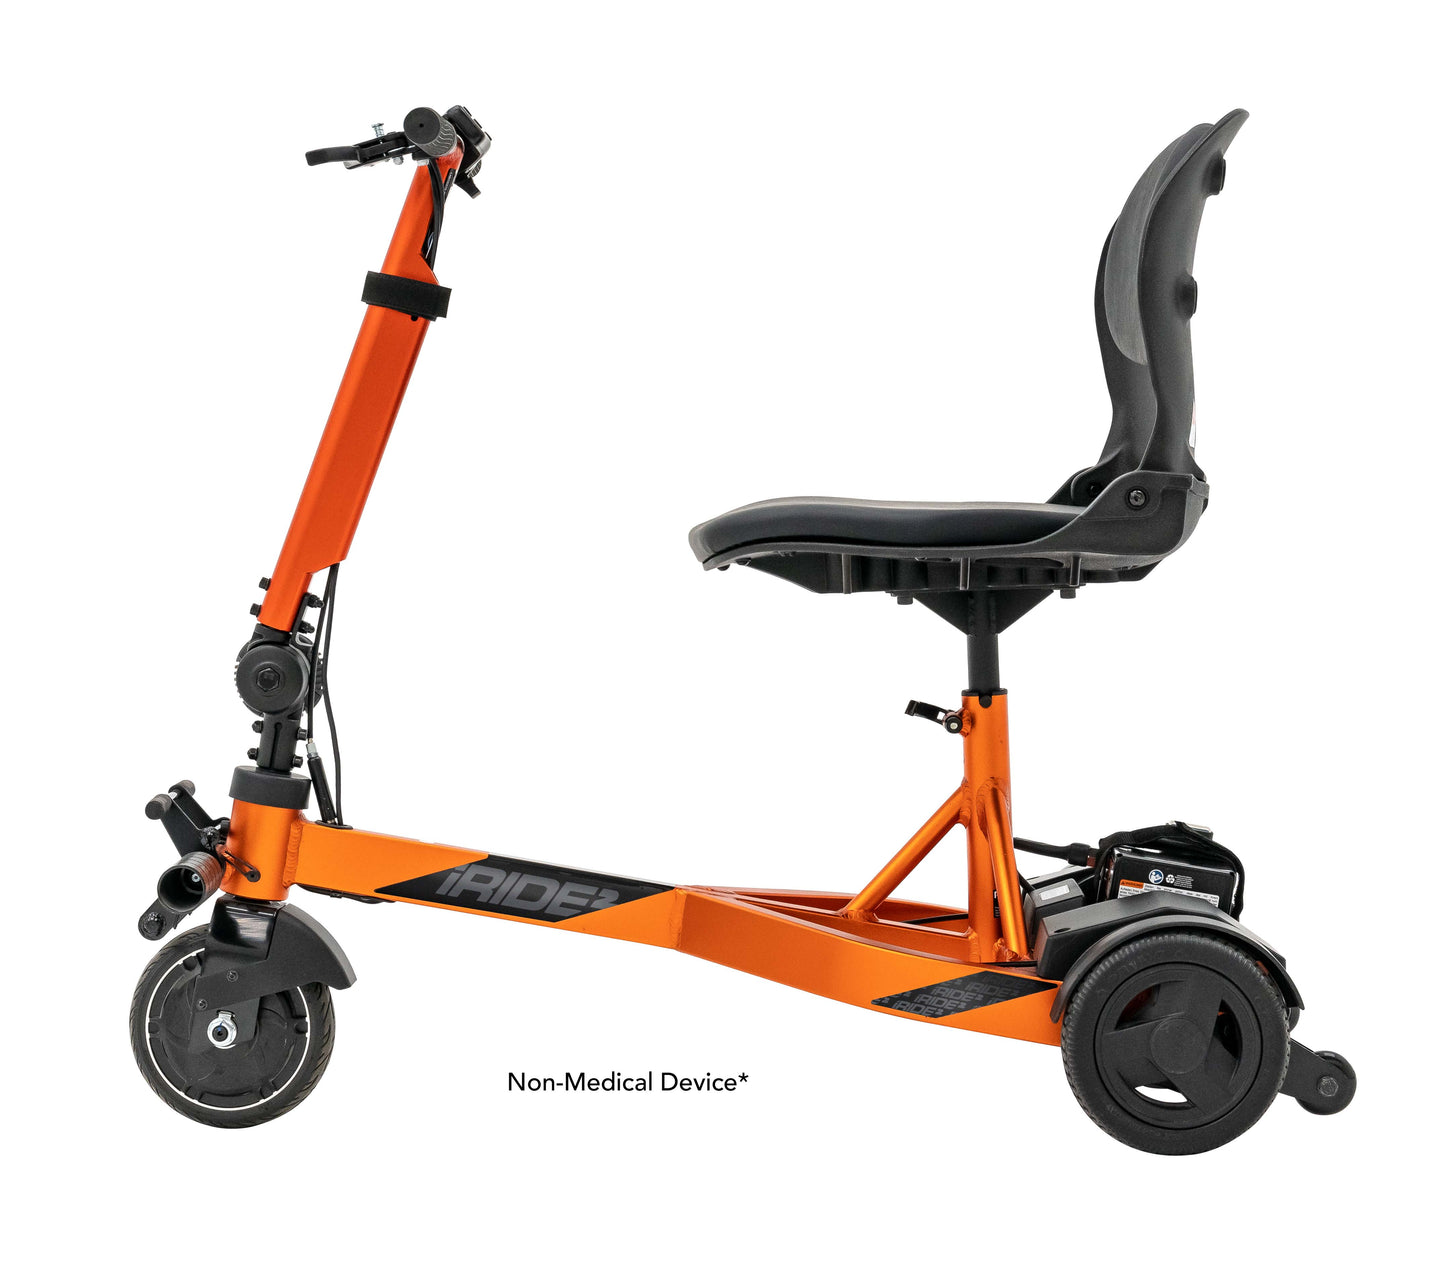 IRide 2 Lightweight Folding Mobility Scooter